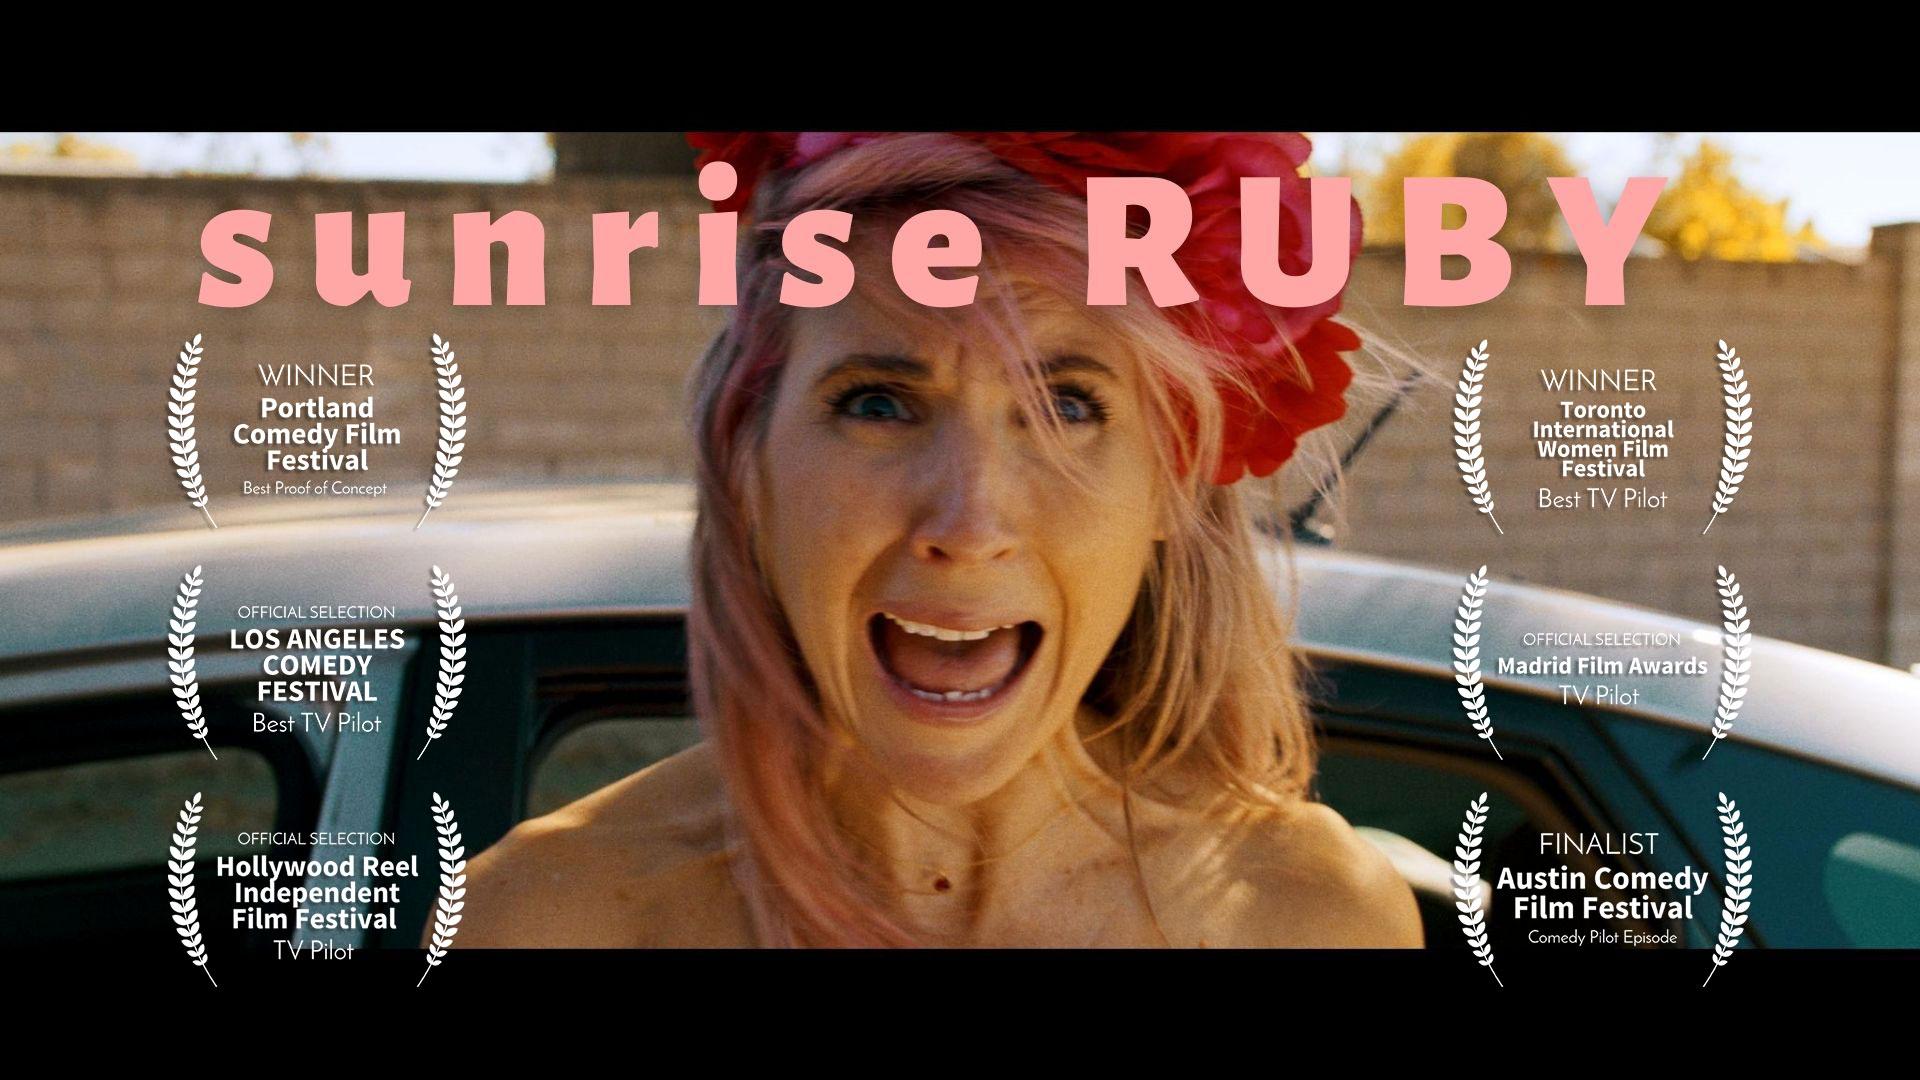 Sunrise RUBY - The Pilot Episode 